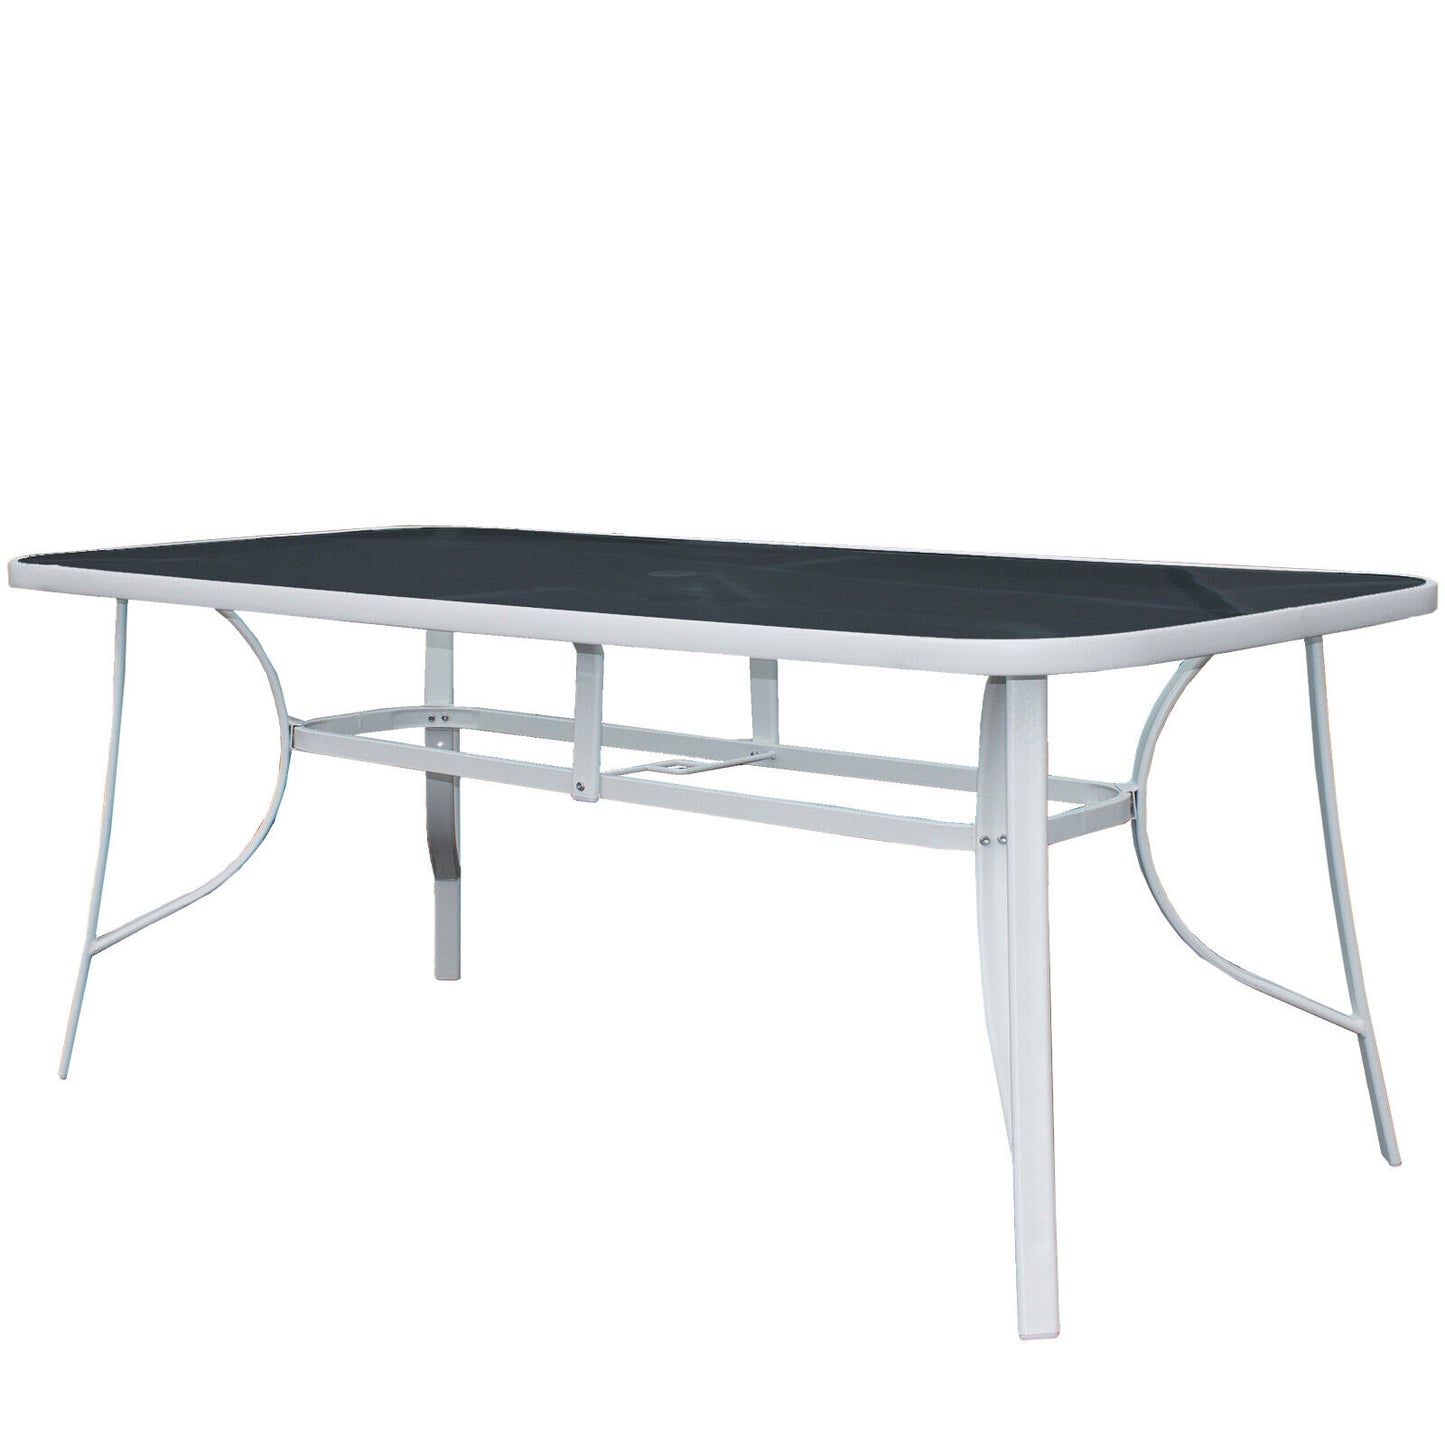 Copy of 9PC Rectangular White Frame Black Glass Table, Black Chair & Parasol Furniture Set